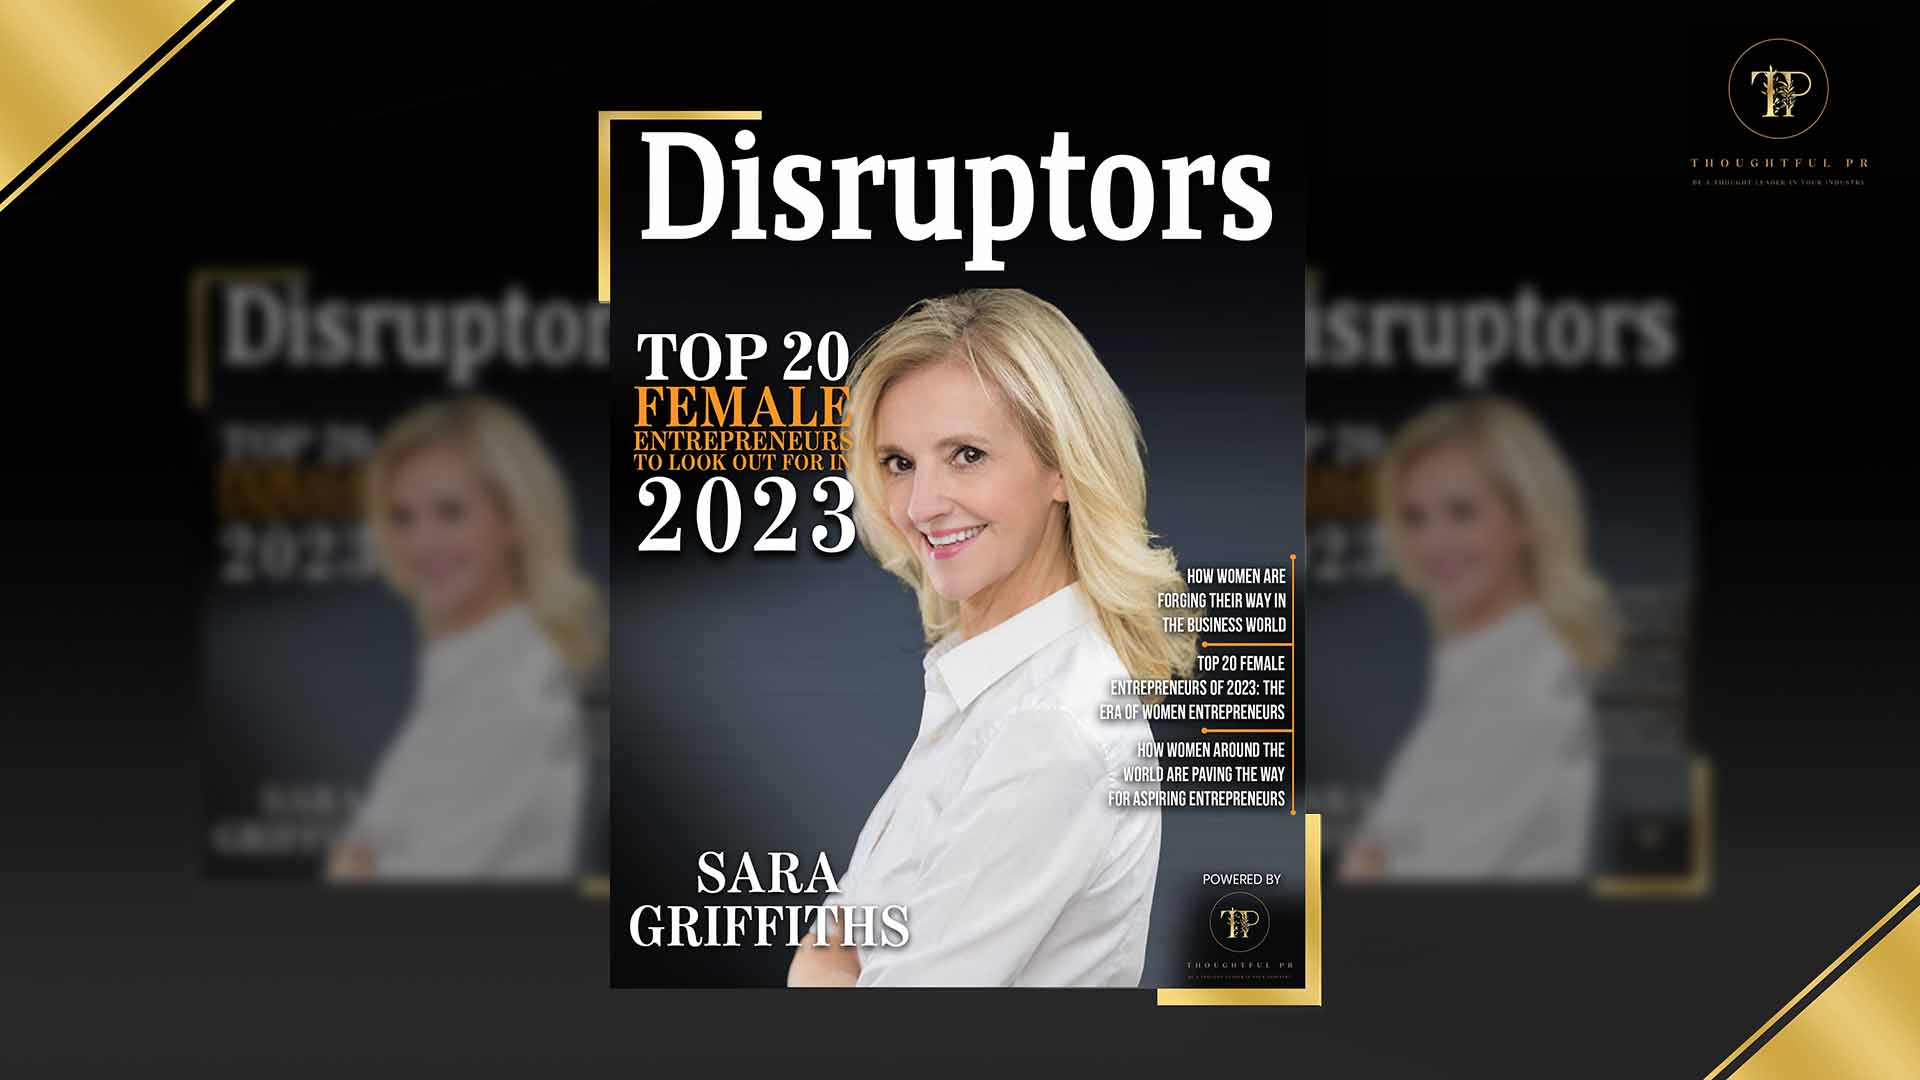 Sara Griffiths Disruptors Article Top 20 Female Entrepreneurs 2023 Montage 1920x1080